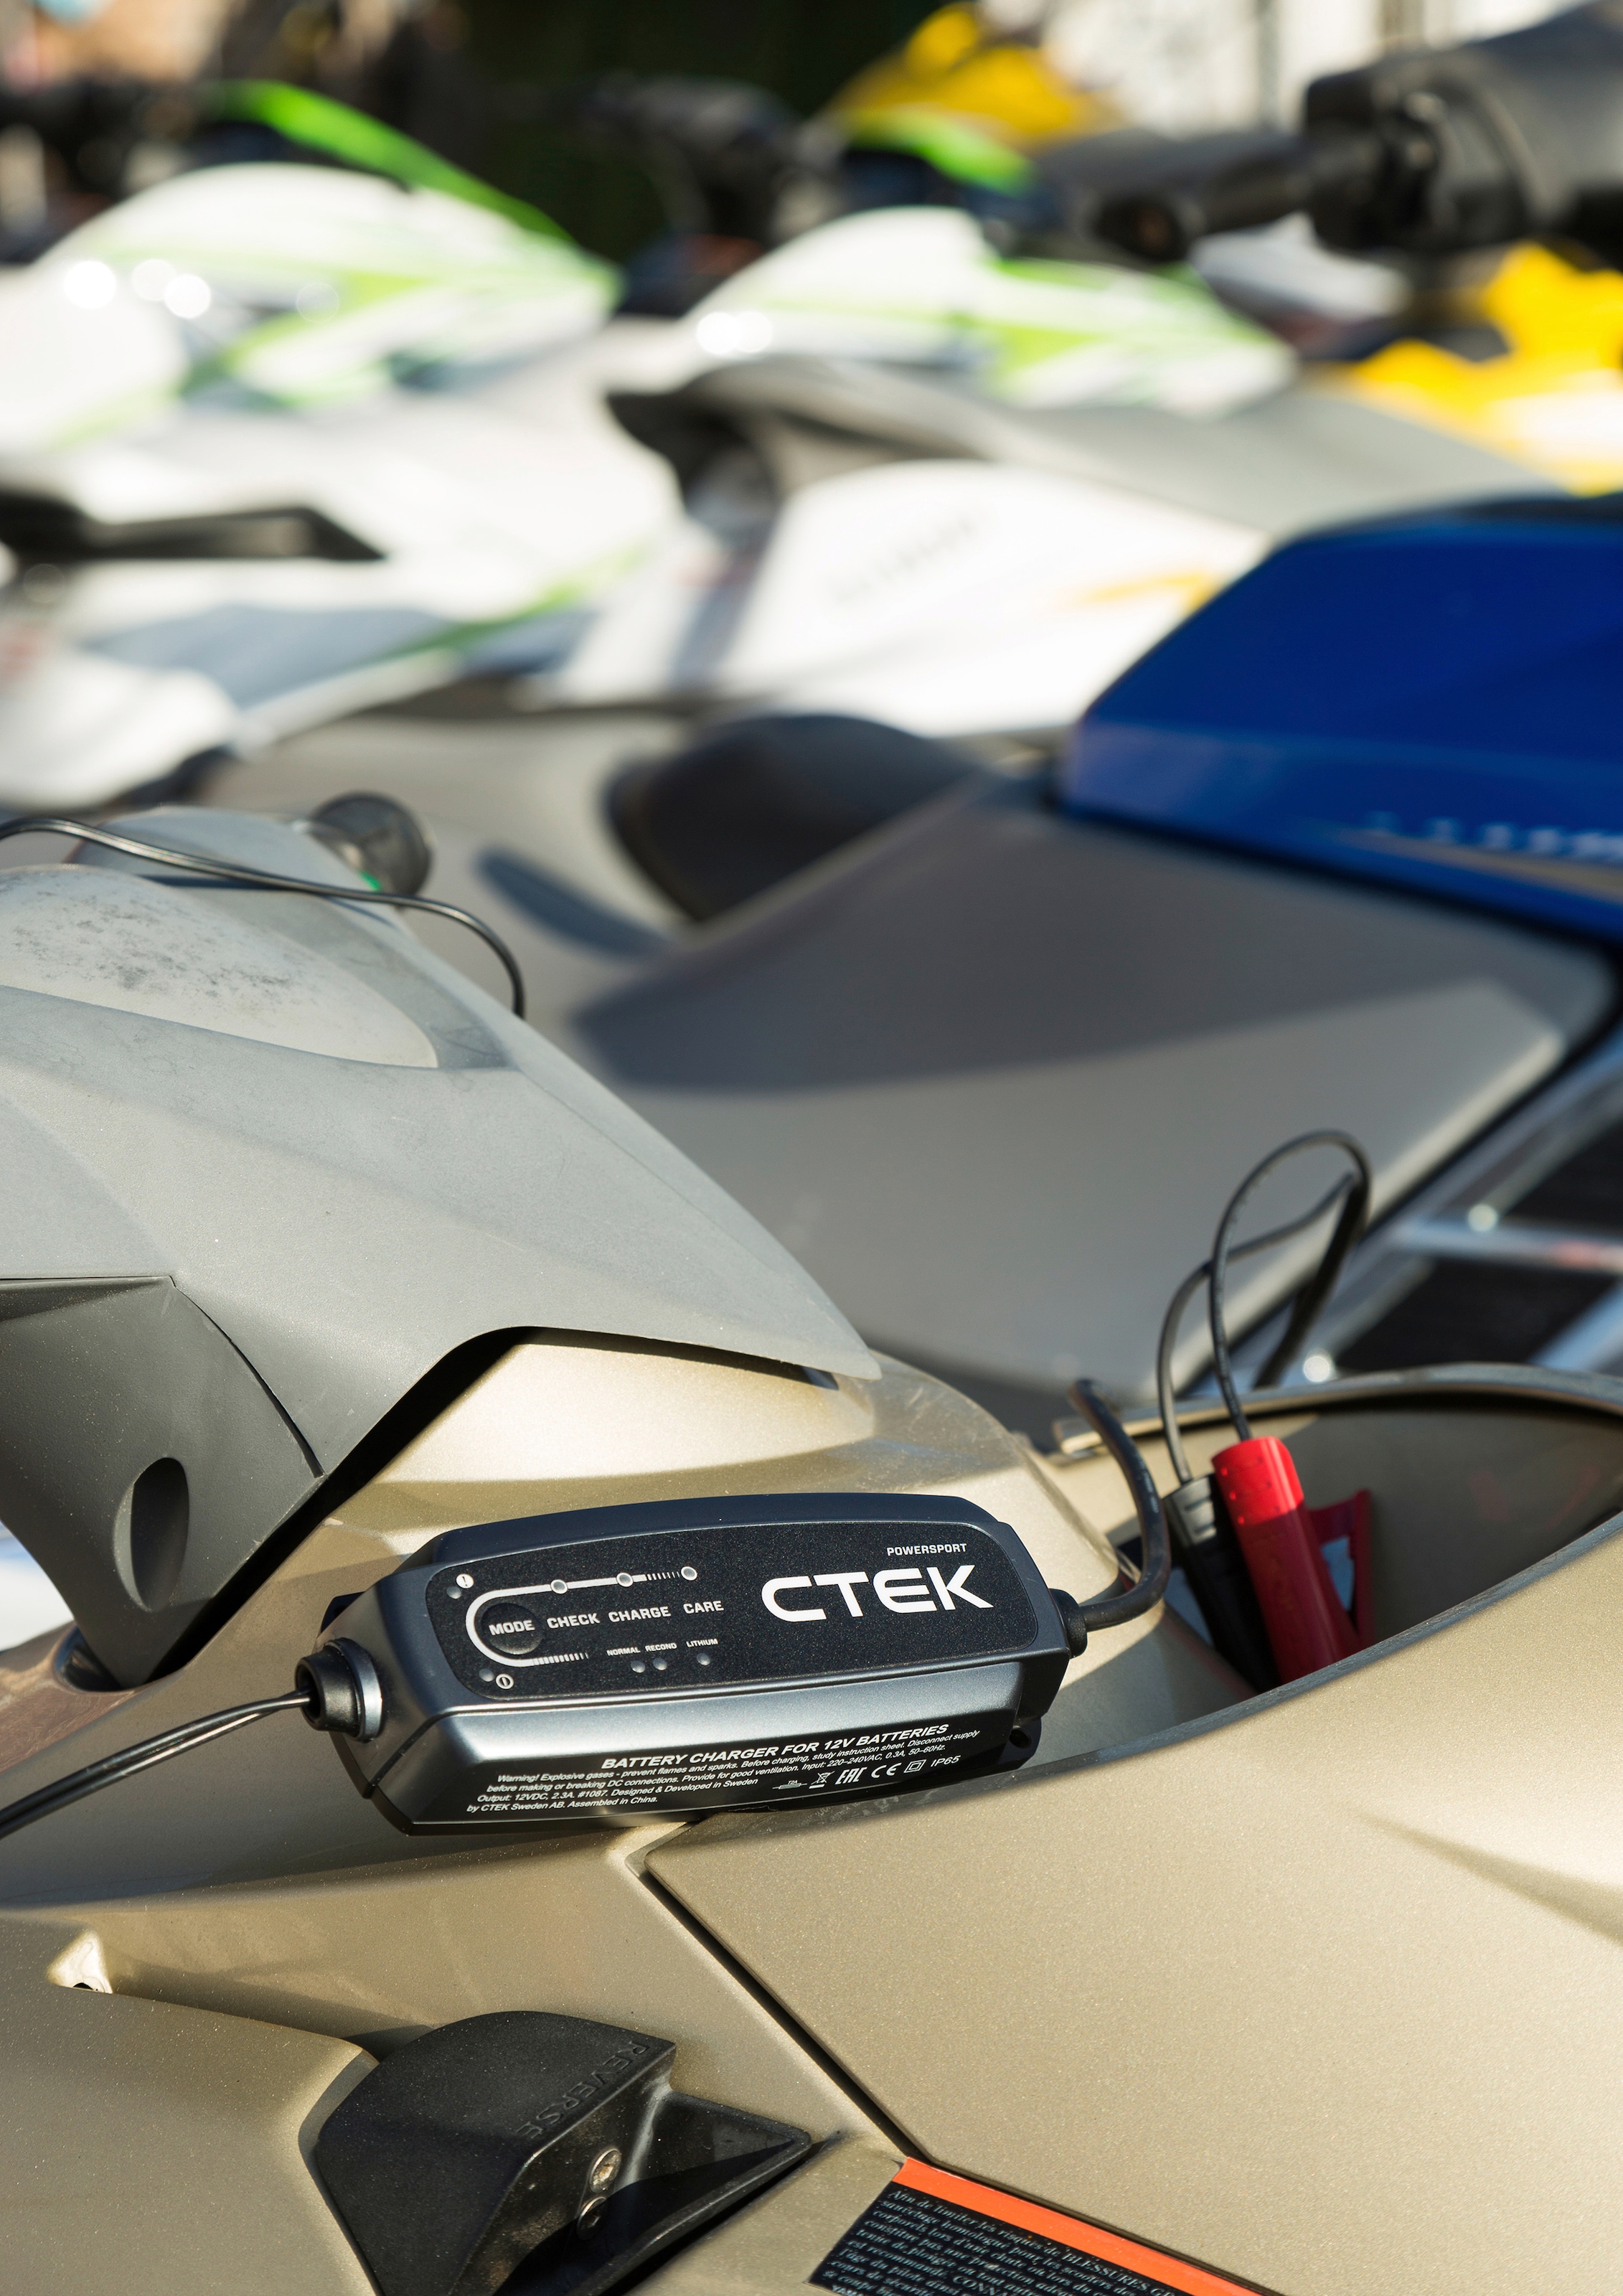 CTEK Batterie-Ladegerät »CT5 Powersport«, für Blei-Säure-Batterien und Lithiumbatterien.